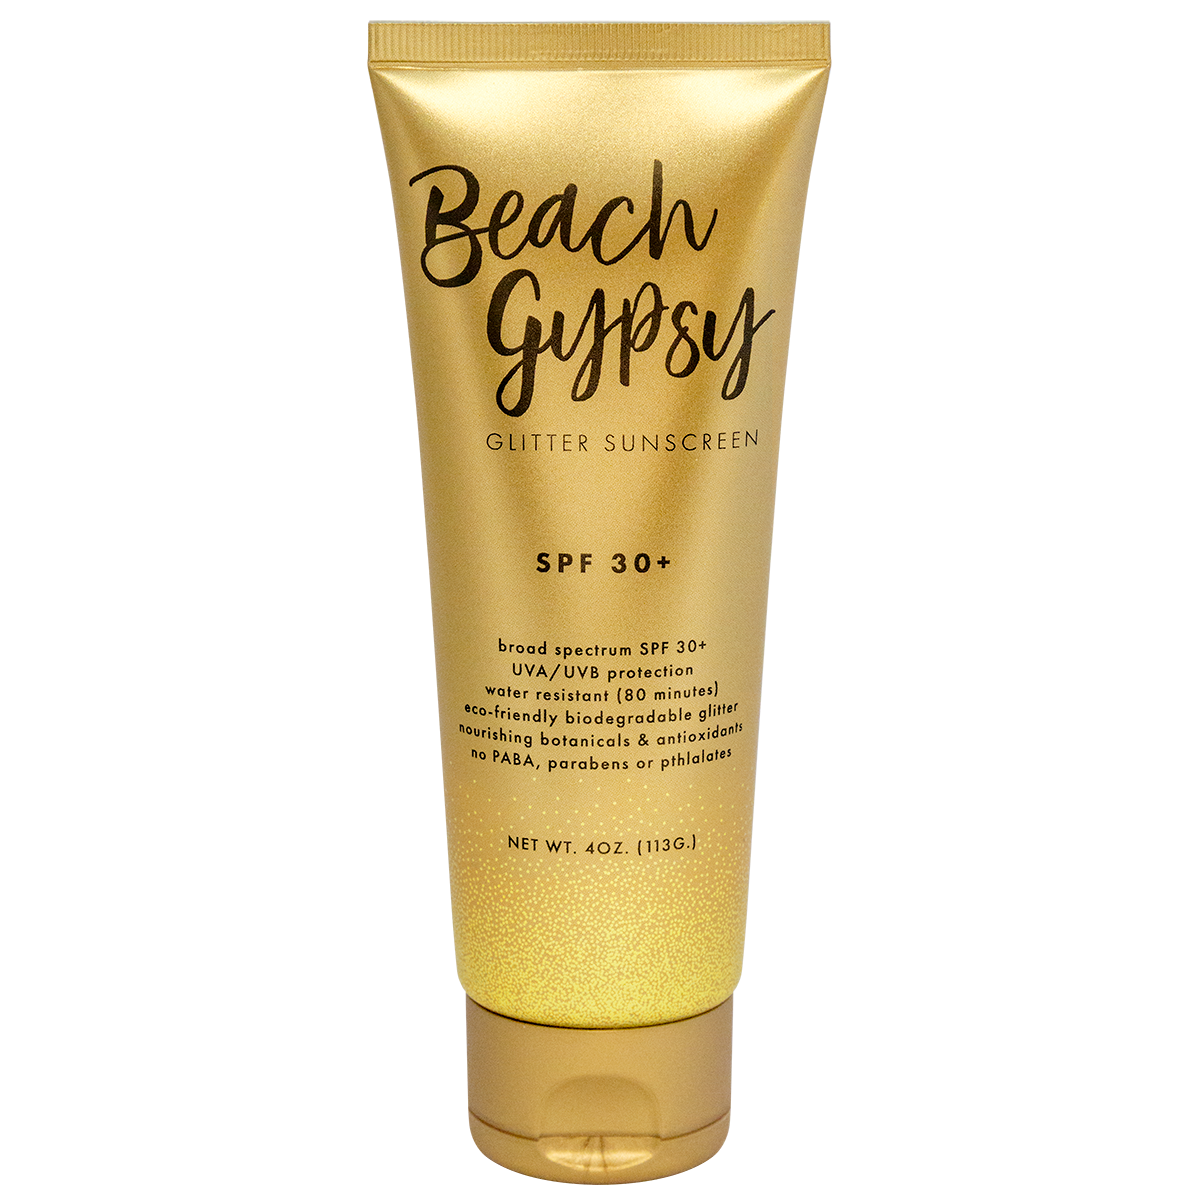 Beach Gypsy Glitter Sunscreen SPF 30+